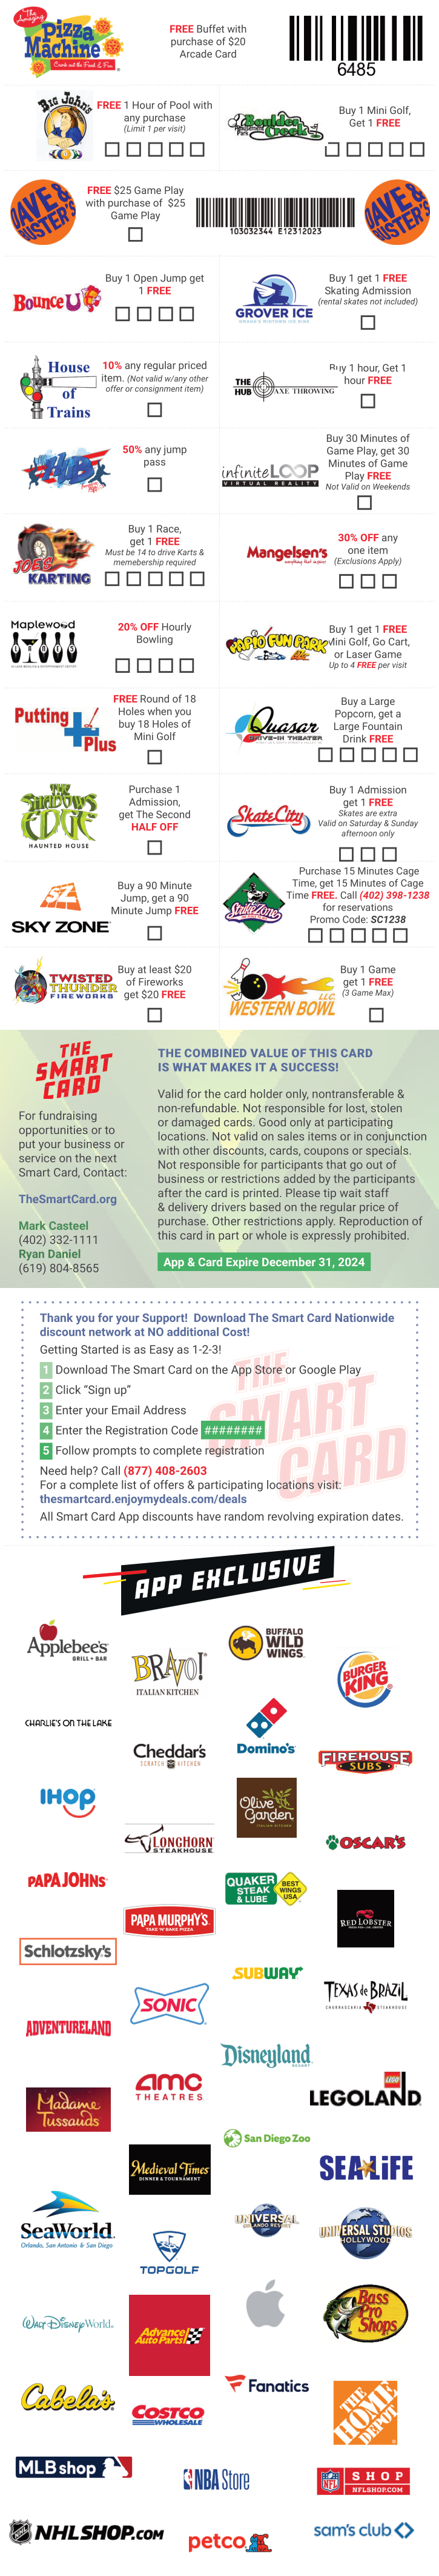 Smart Card Reader